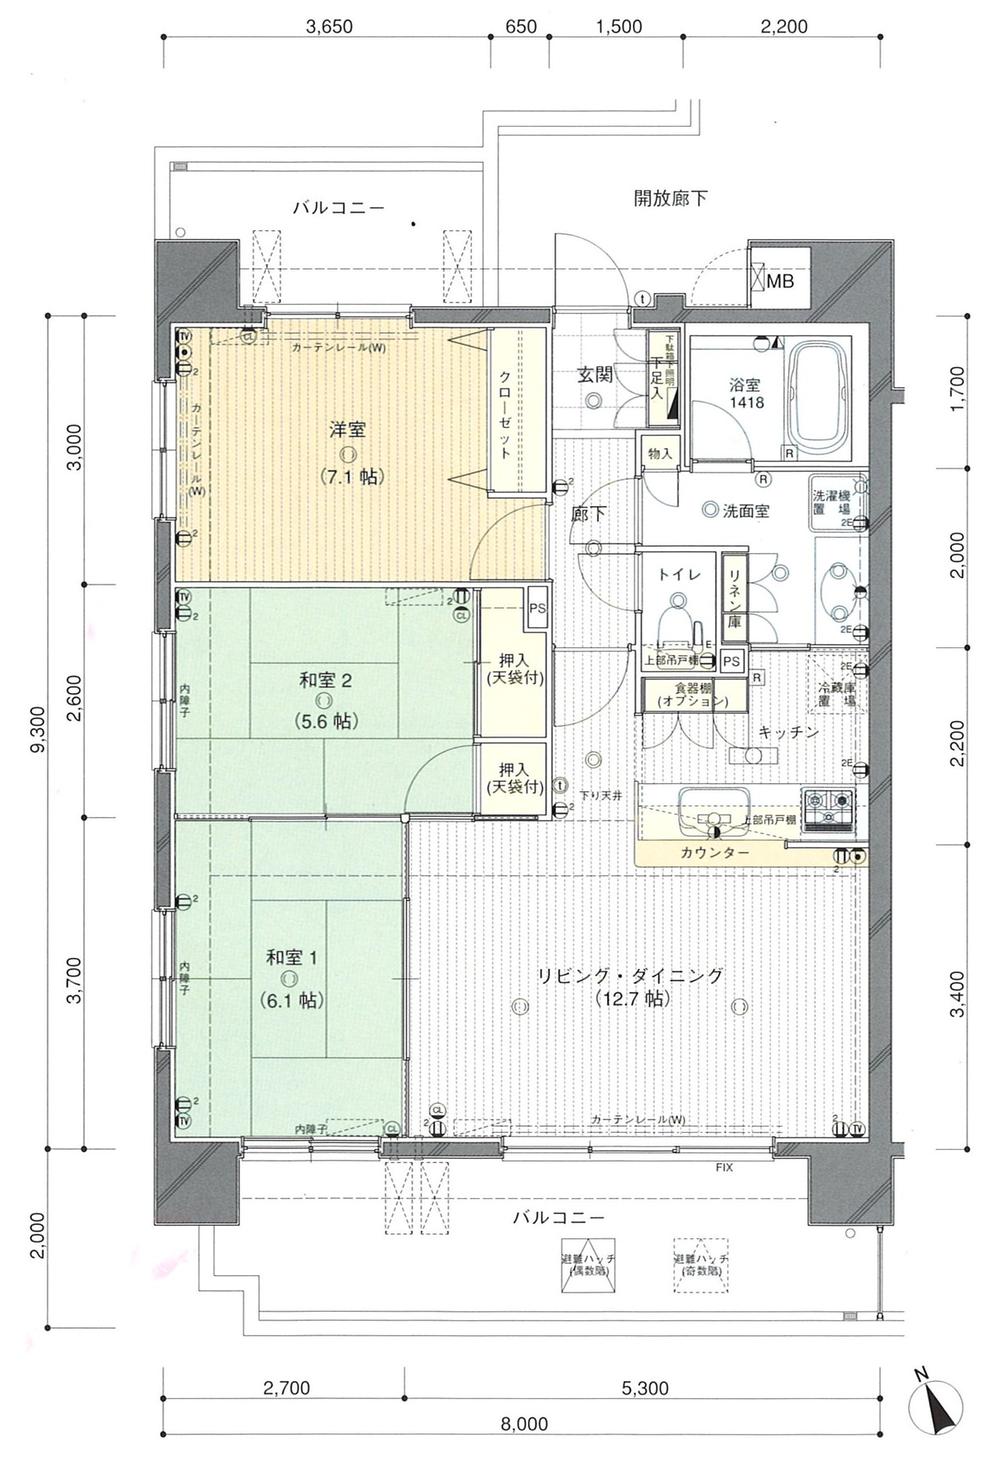 Floor plan. 3LDK, Price 18 million yen, Footprint 74.4 sq m , Balcony area 21.32 sq m